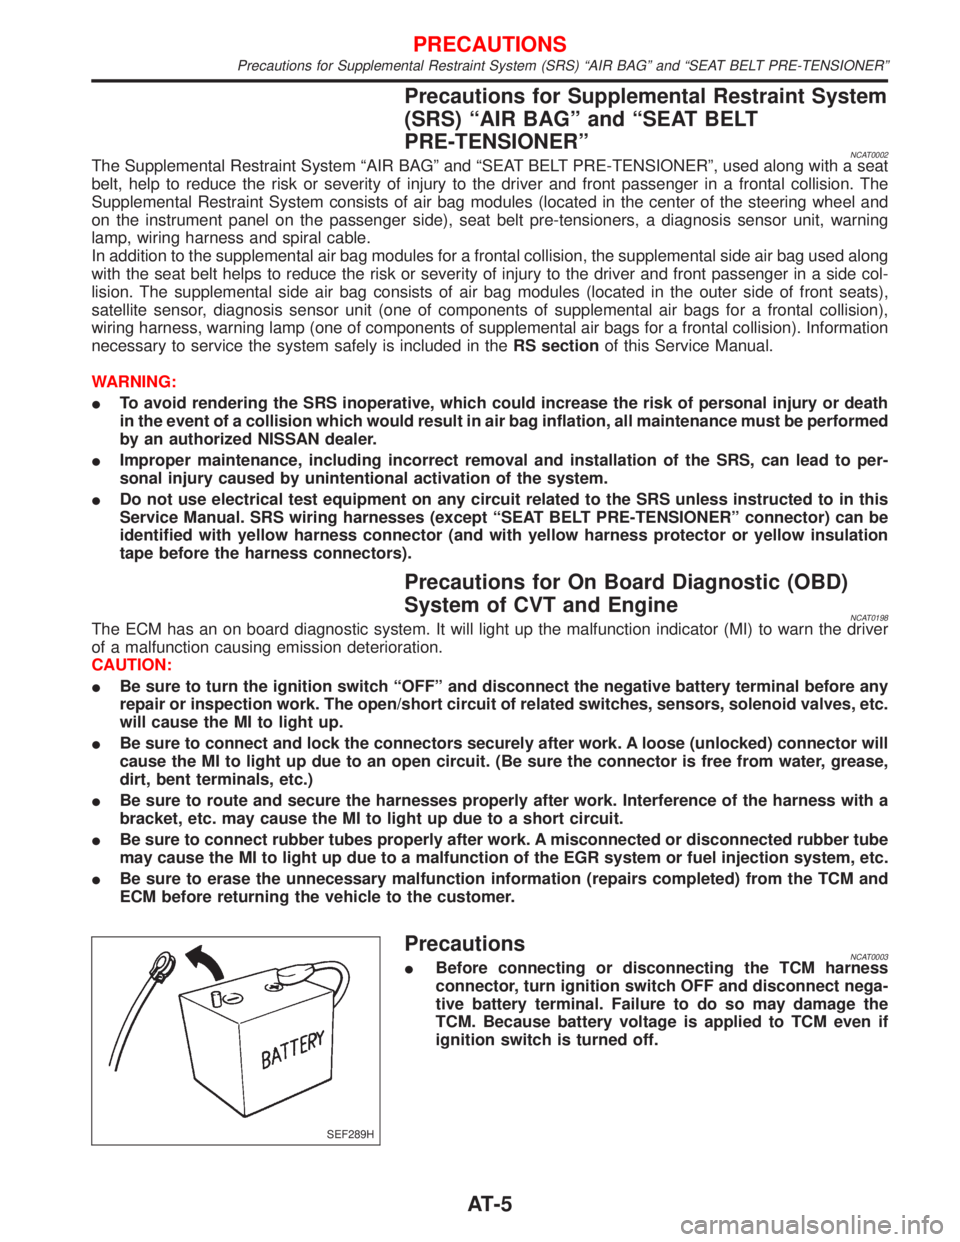 NISSAN PRIMERA 1999  Electronic Repair Manual Precautions for Supplemental Restraint System
(SRS) ªAIR BAGº and ªSEAT BELT
PRE-TENSIONERº
NCAT0002The Supplemental Restraint System ªAIR BAGº and ªSEAT BELT PRE-TENSIONERº, used along with a